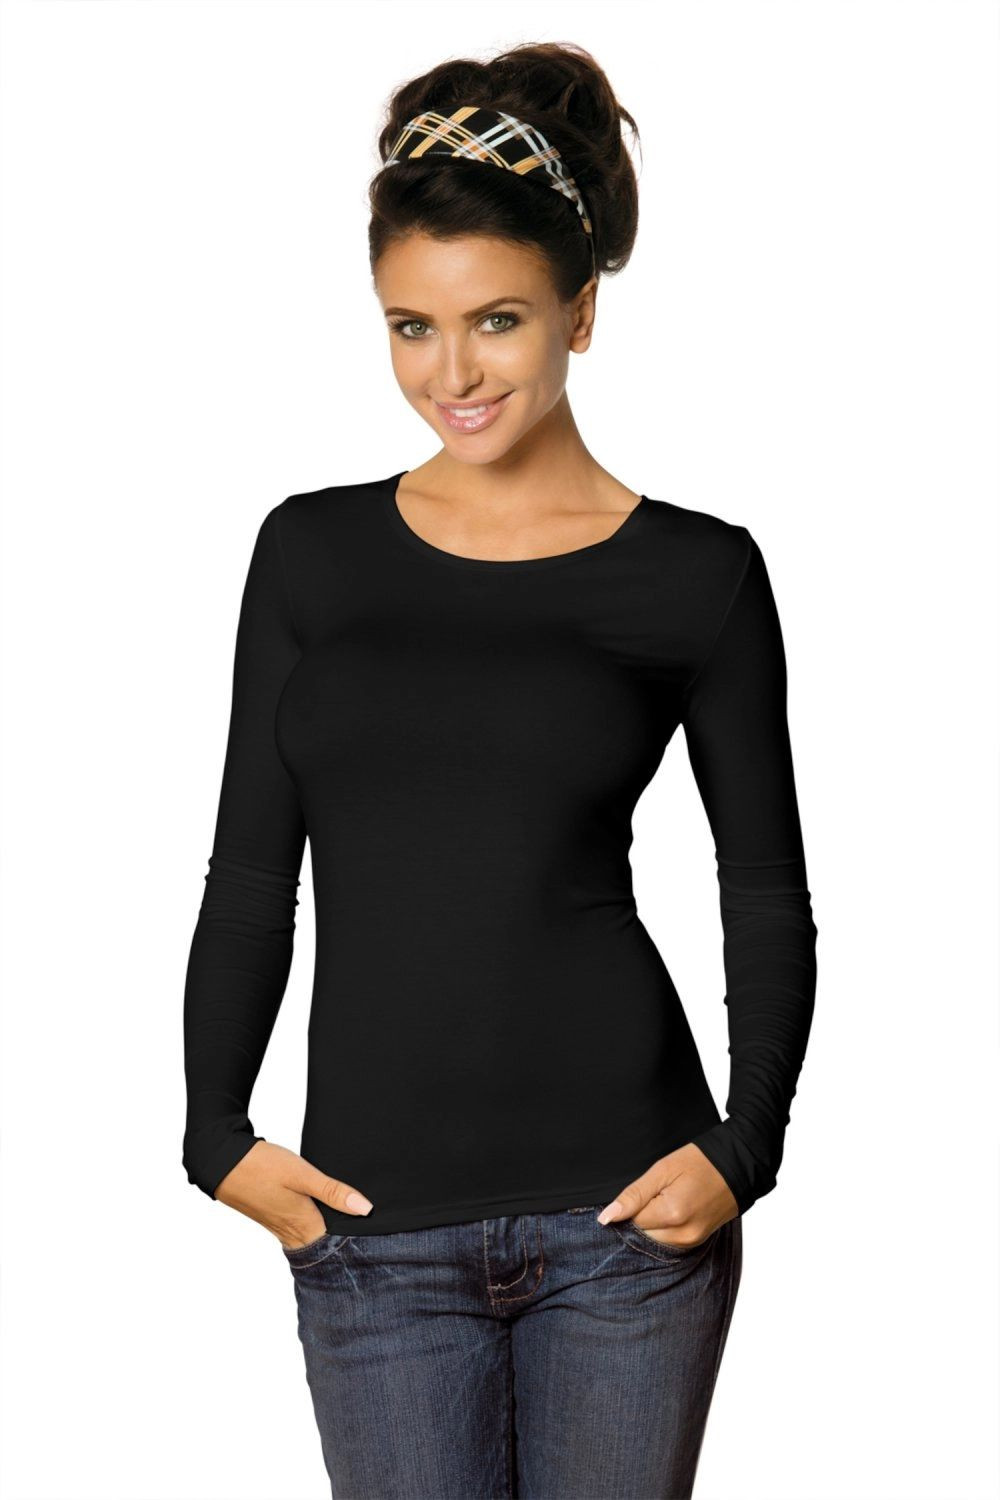 Dámské tričko Manati long black - BABELL černá XL